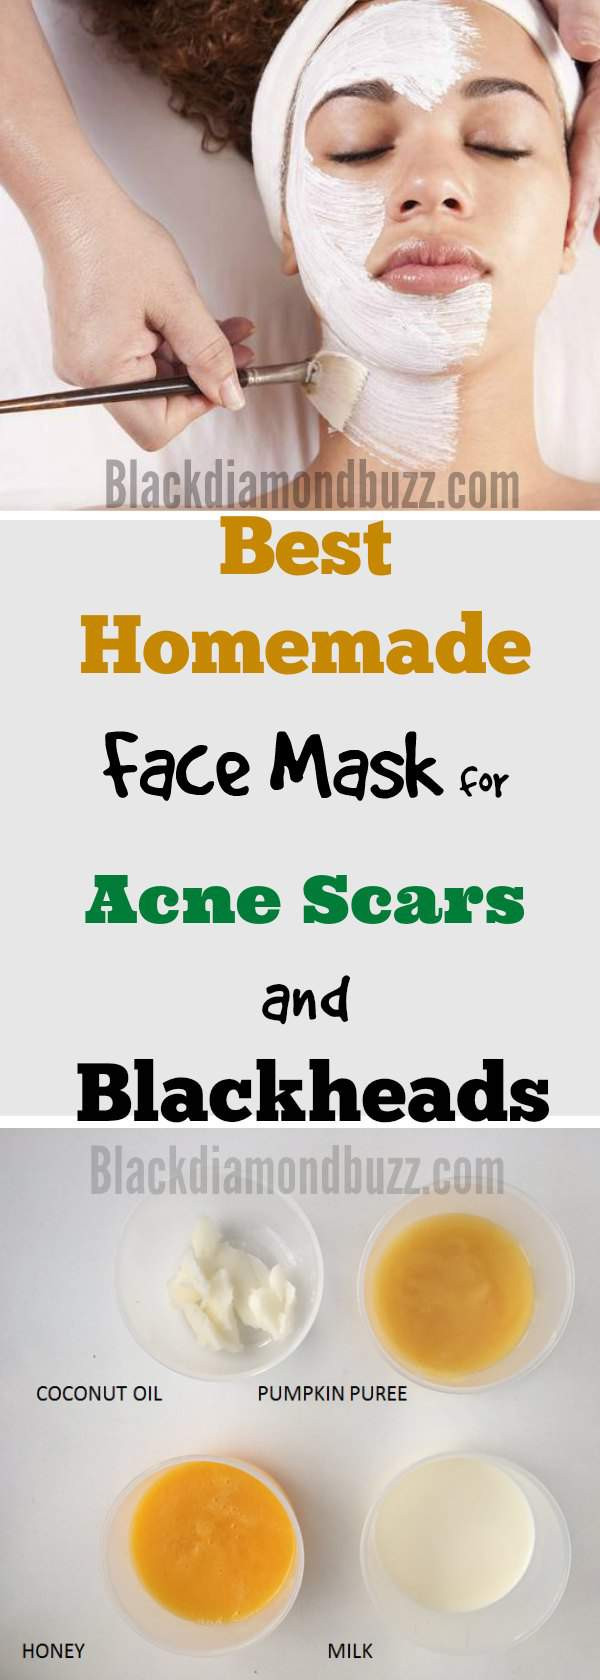 Face Mask For Acne DIY
 DIY Face Mask for Acne 7 Best Homemade Face Masks